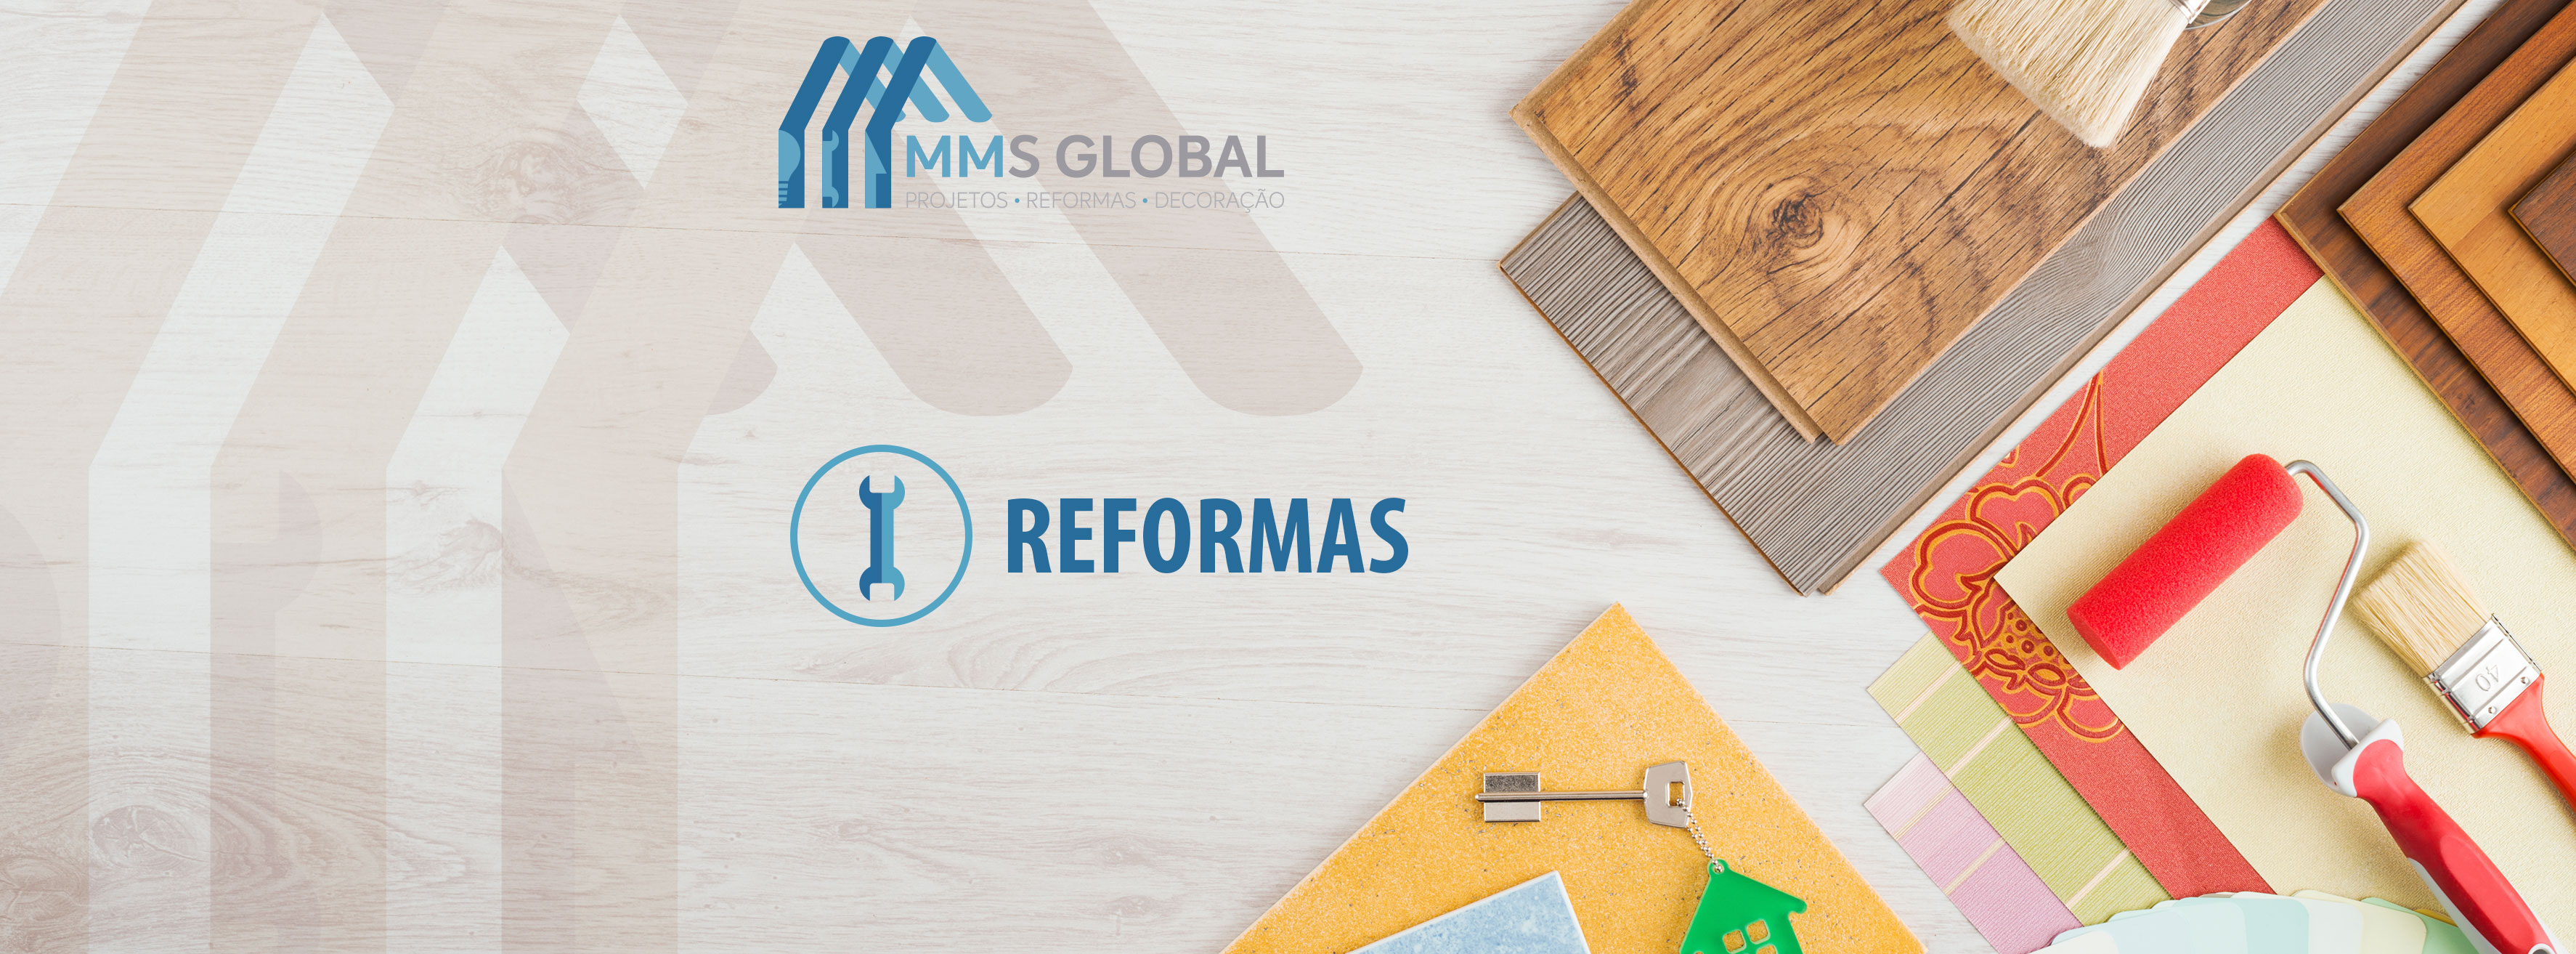 slide-mmsglobal-reformas1